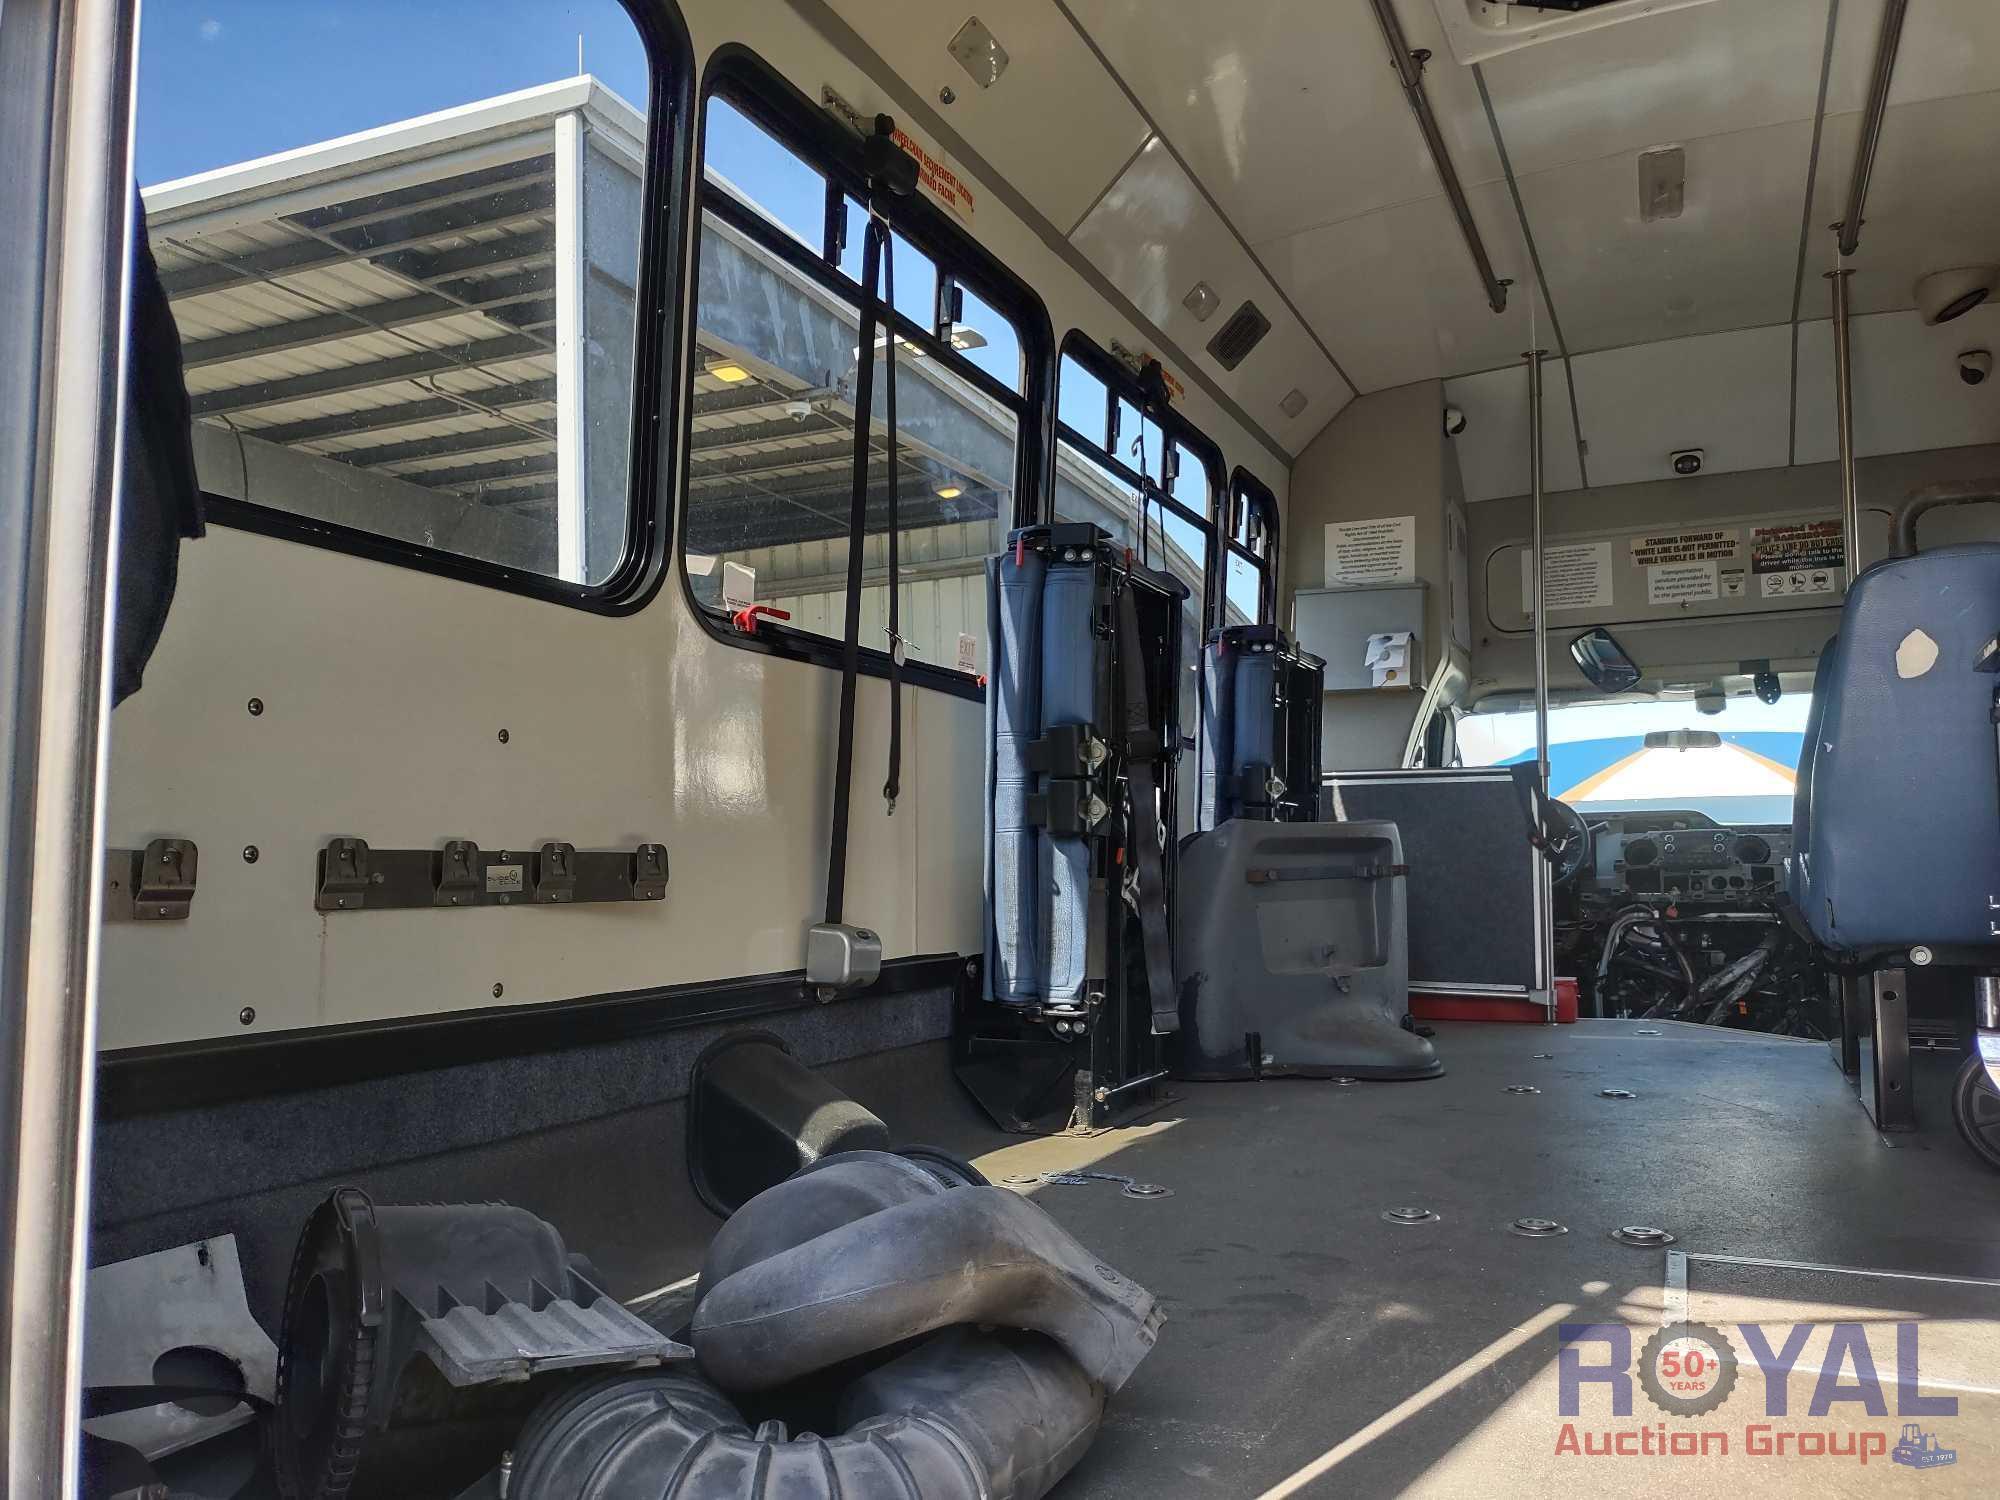 2016 Ford E450 Handicap Shuttle Bus